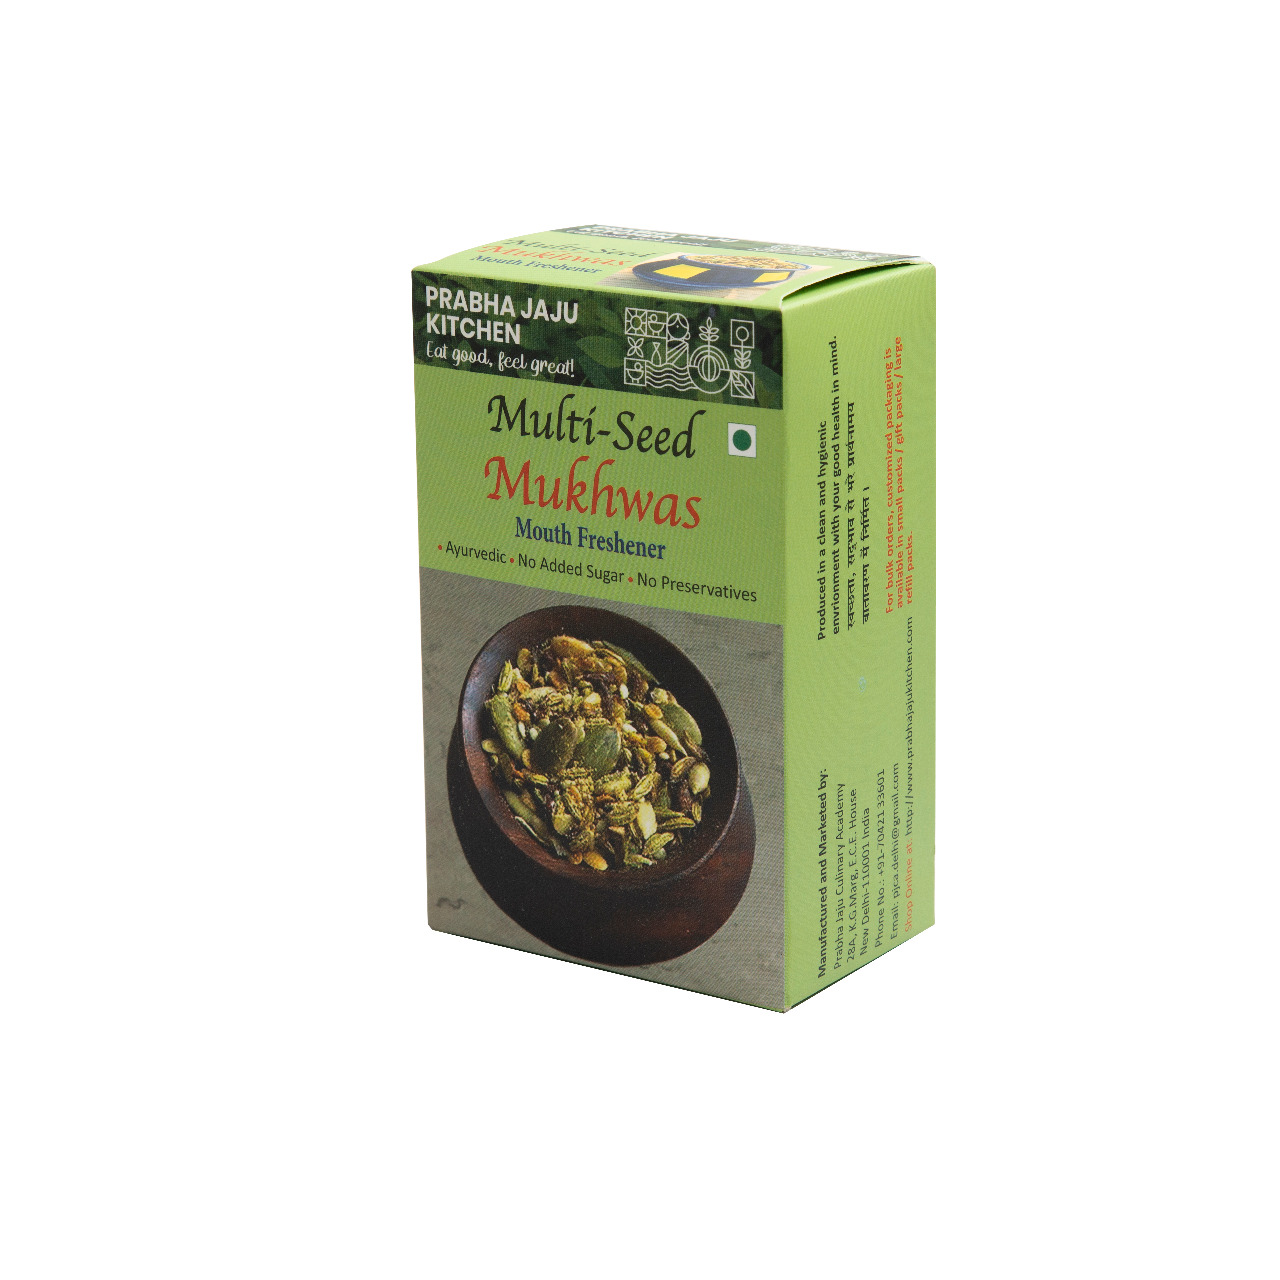 Buy Prabha Jaju Multi-seeds Mukhwas (Mouth Freshener ) at Best Price Online